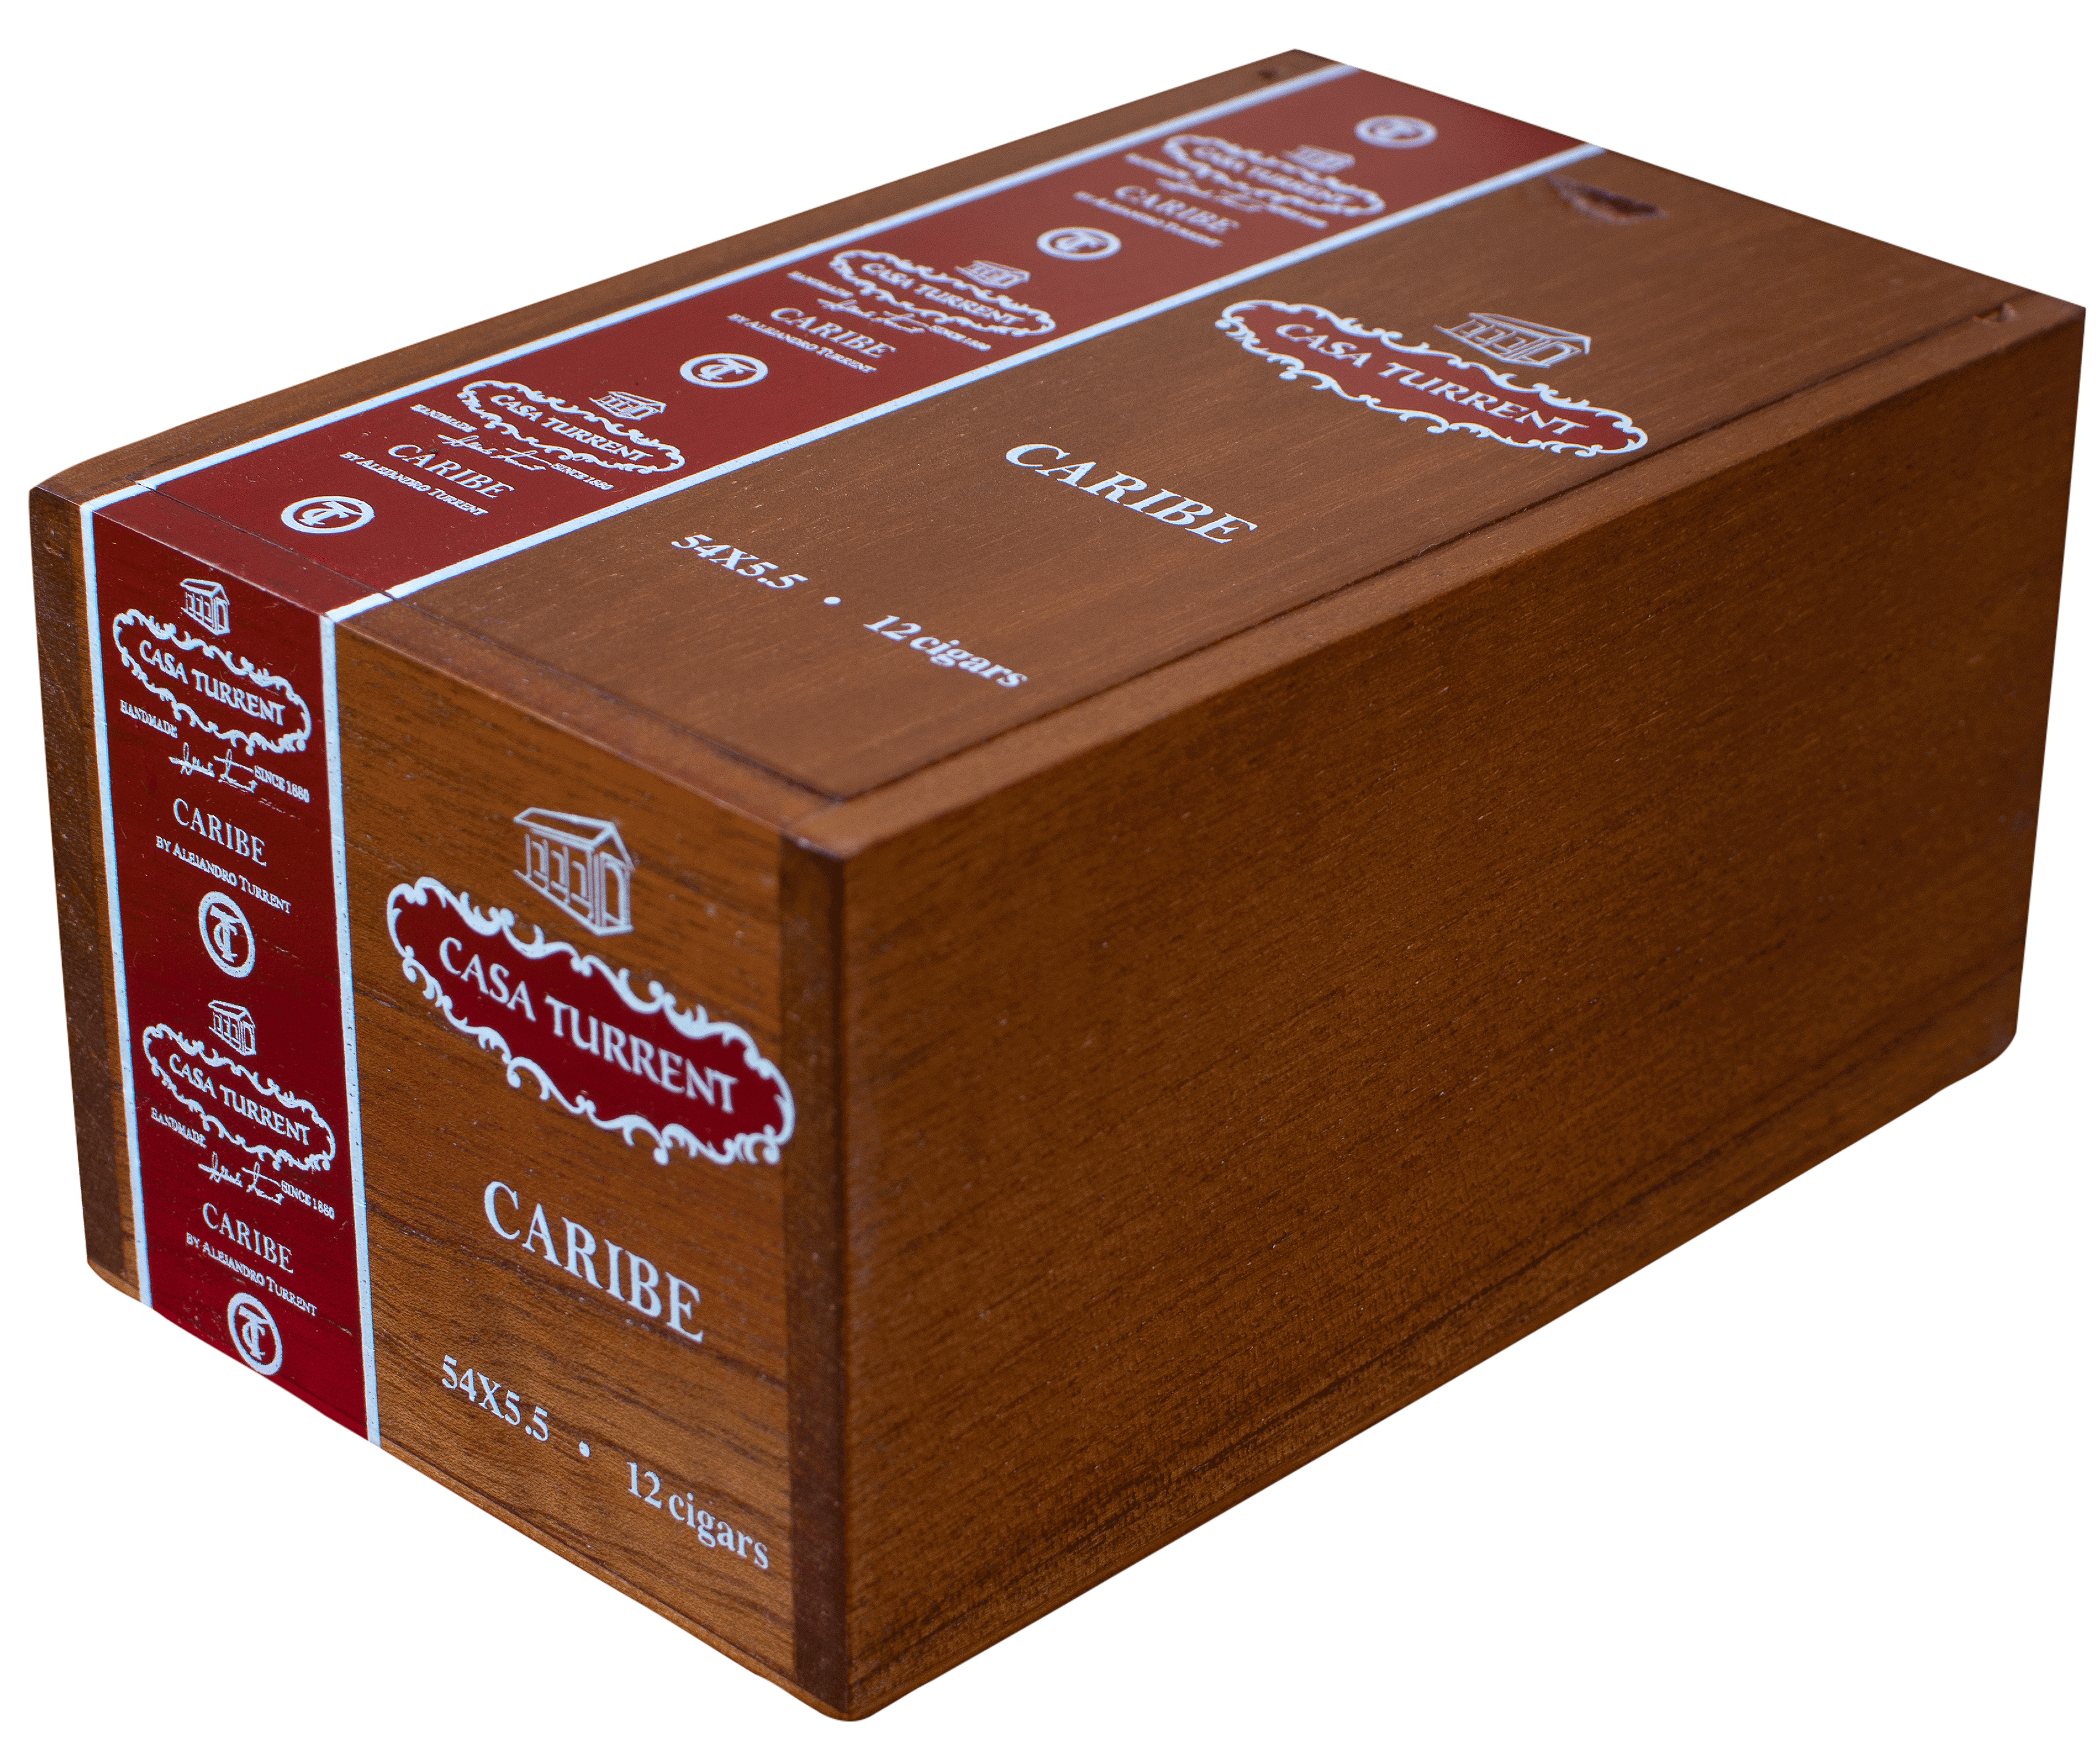 12er Kiste Casa Turrent Origen Caribe obusto Extra Zigarren, Box verschlossen